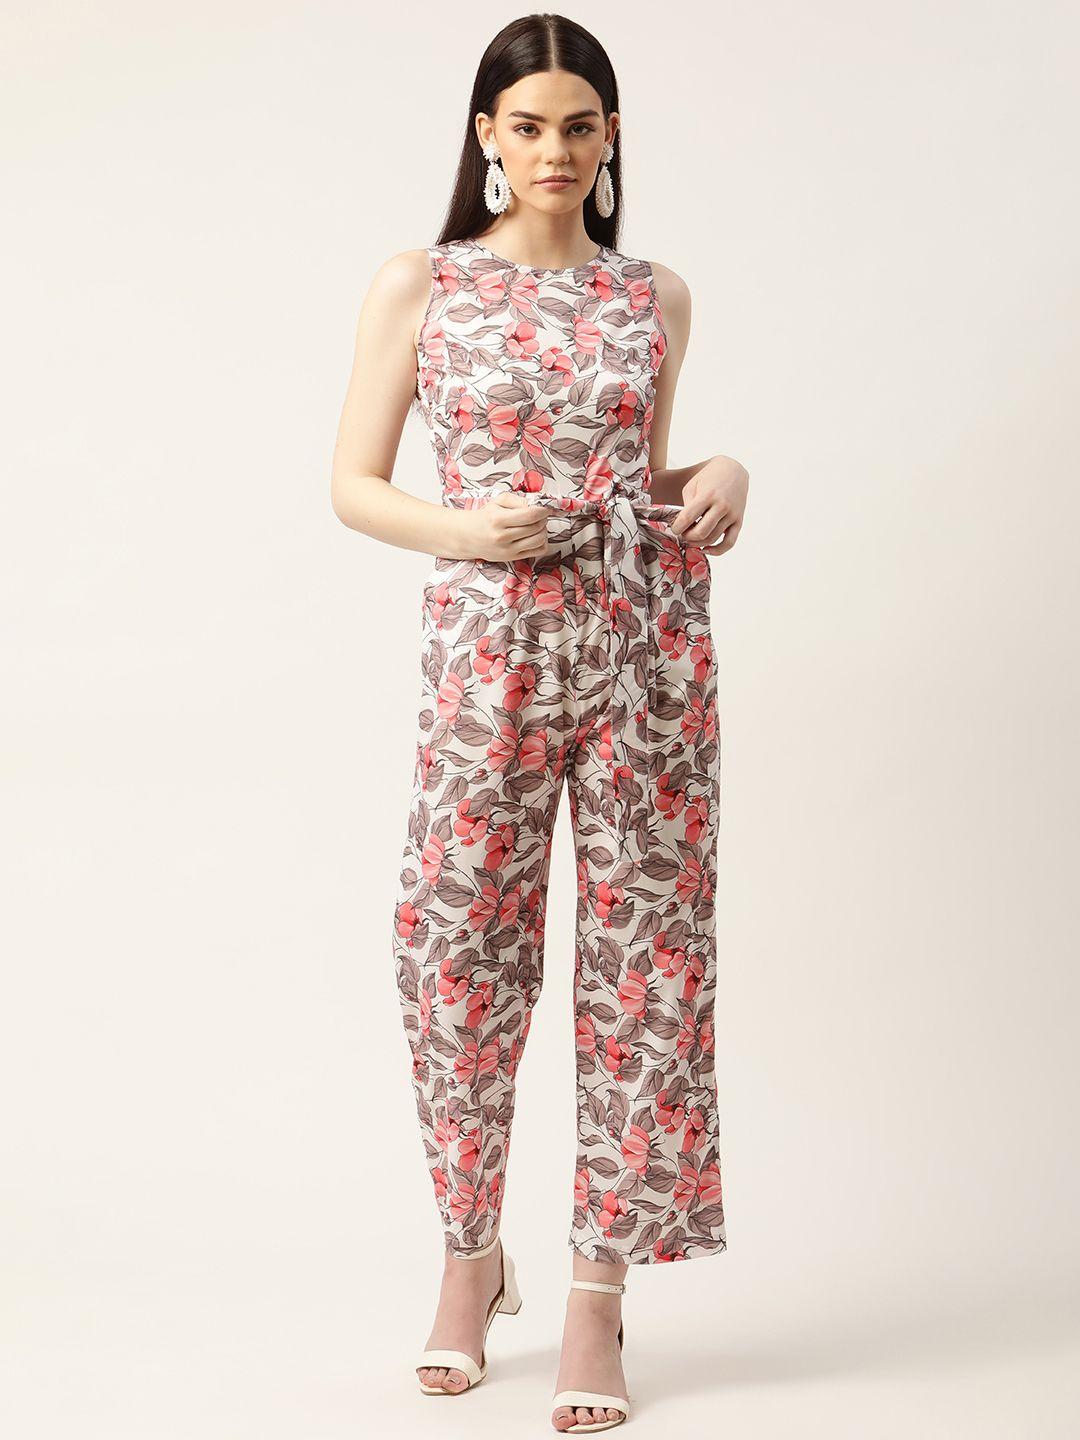 Sleek Italia Off White & Peach-Coloured Floral Printed Basic Jumpsuit with Waist Tie-Ups